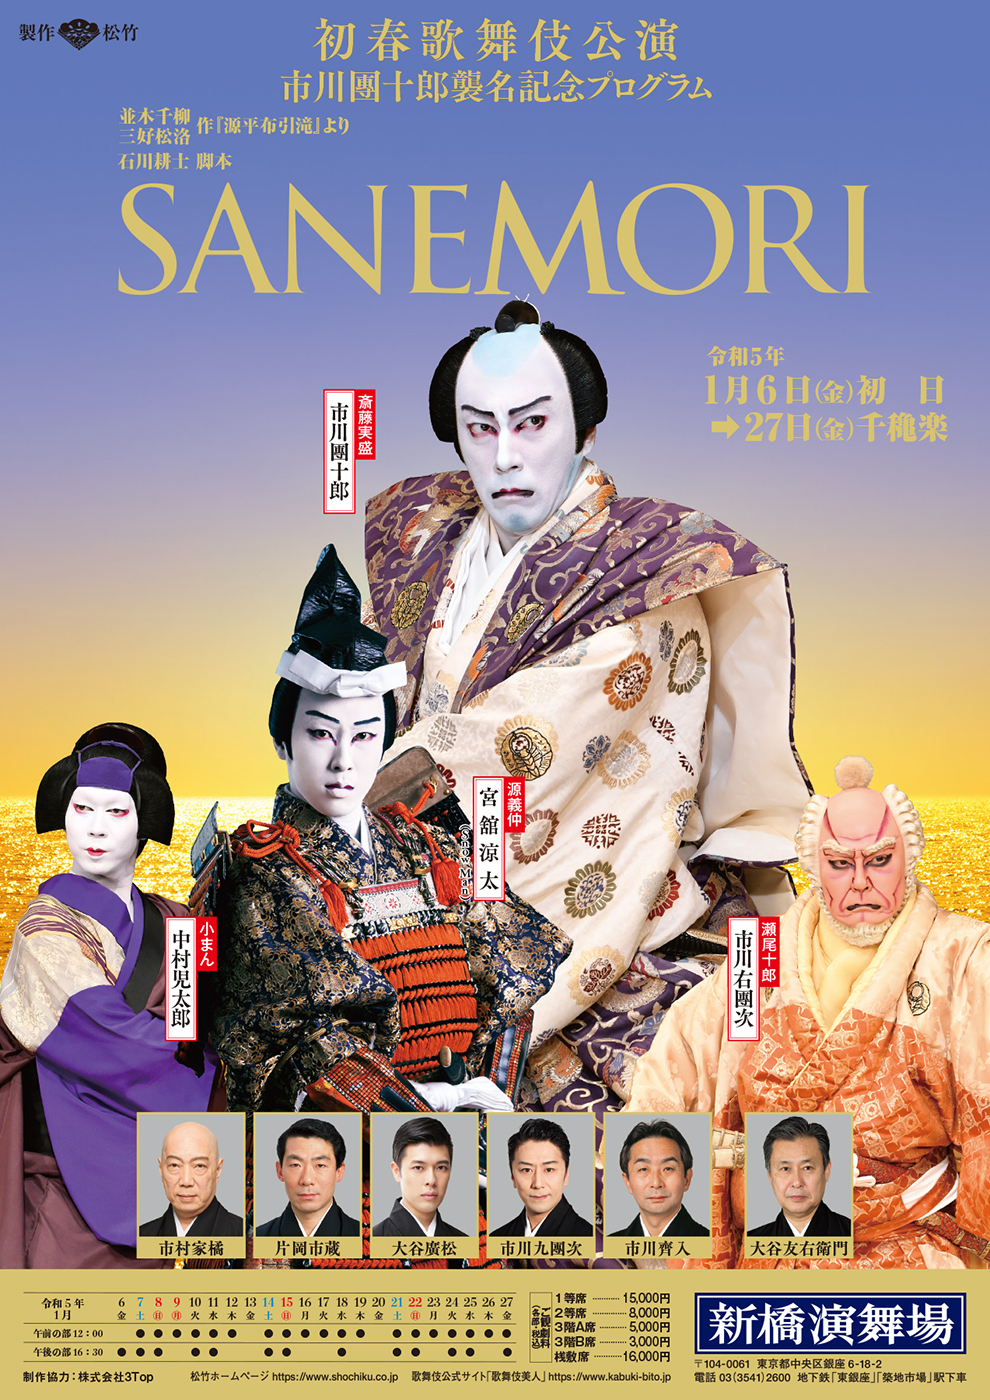 初春歌舞伎公演 市川團十郎襲名記念プログラム SANEMORI